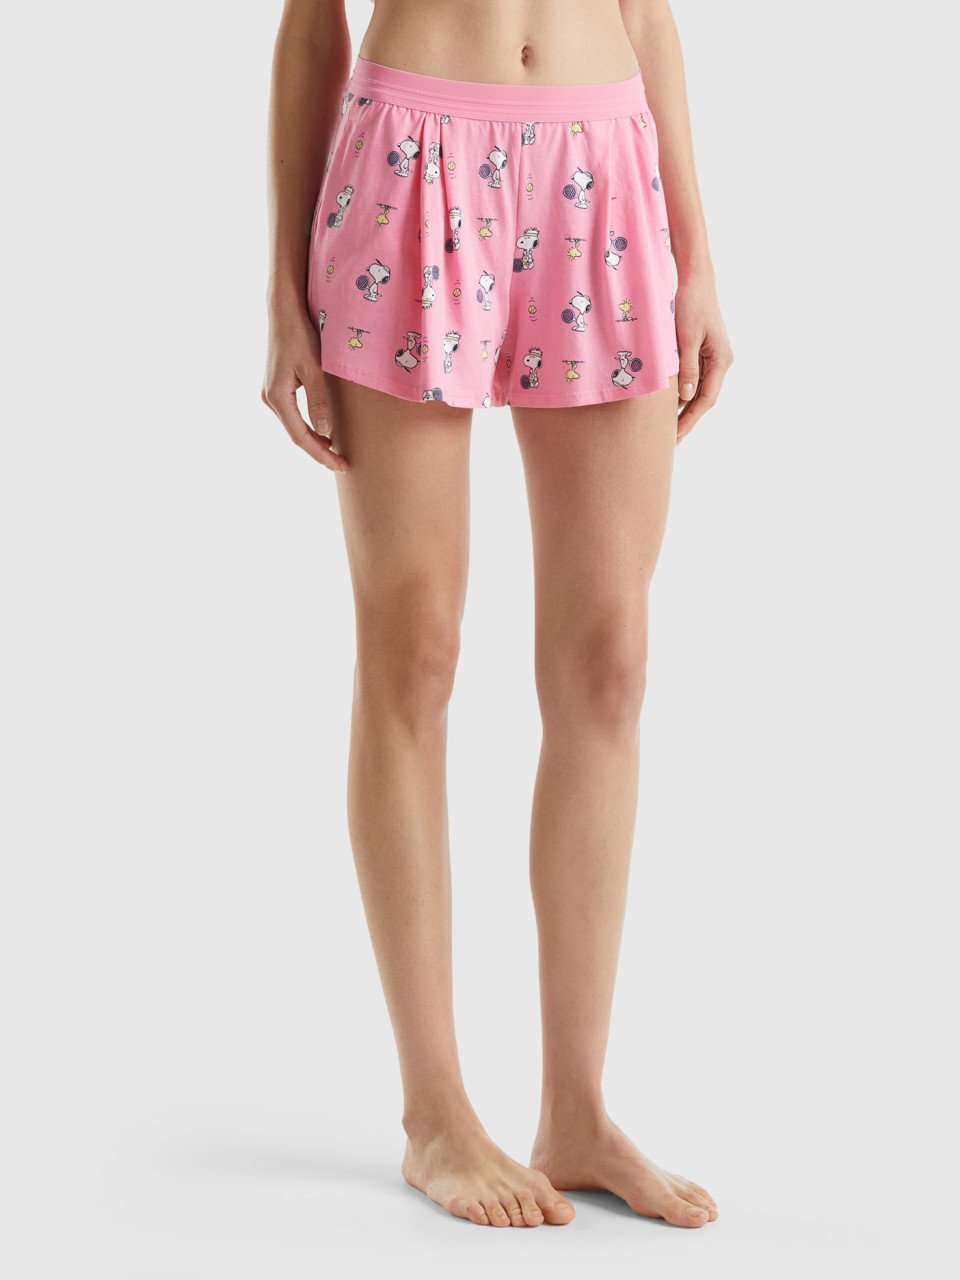 Benetton, Snoopy ©peanuts Shorts, Pink, Women